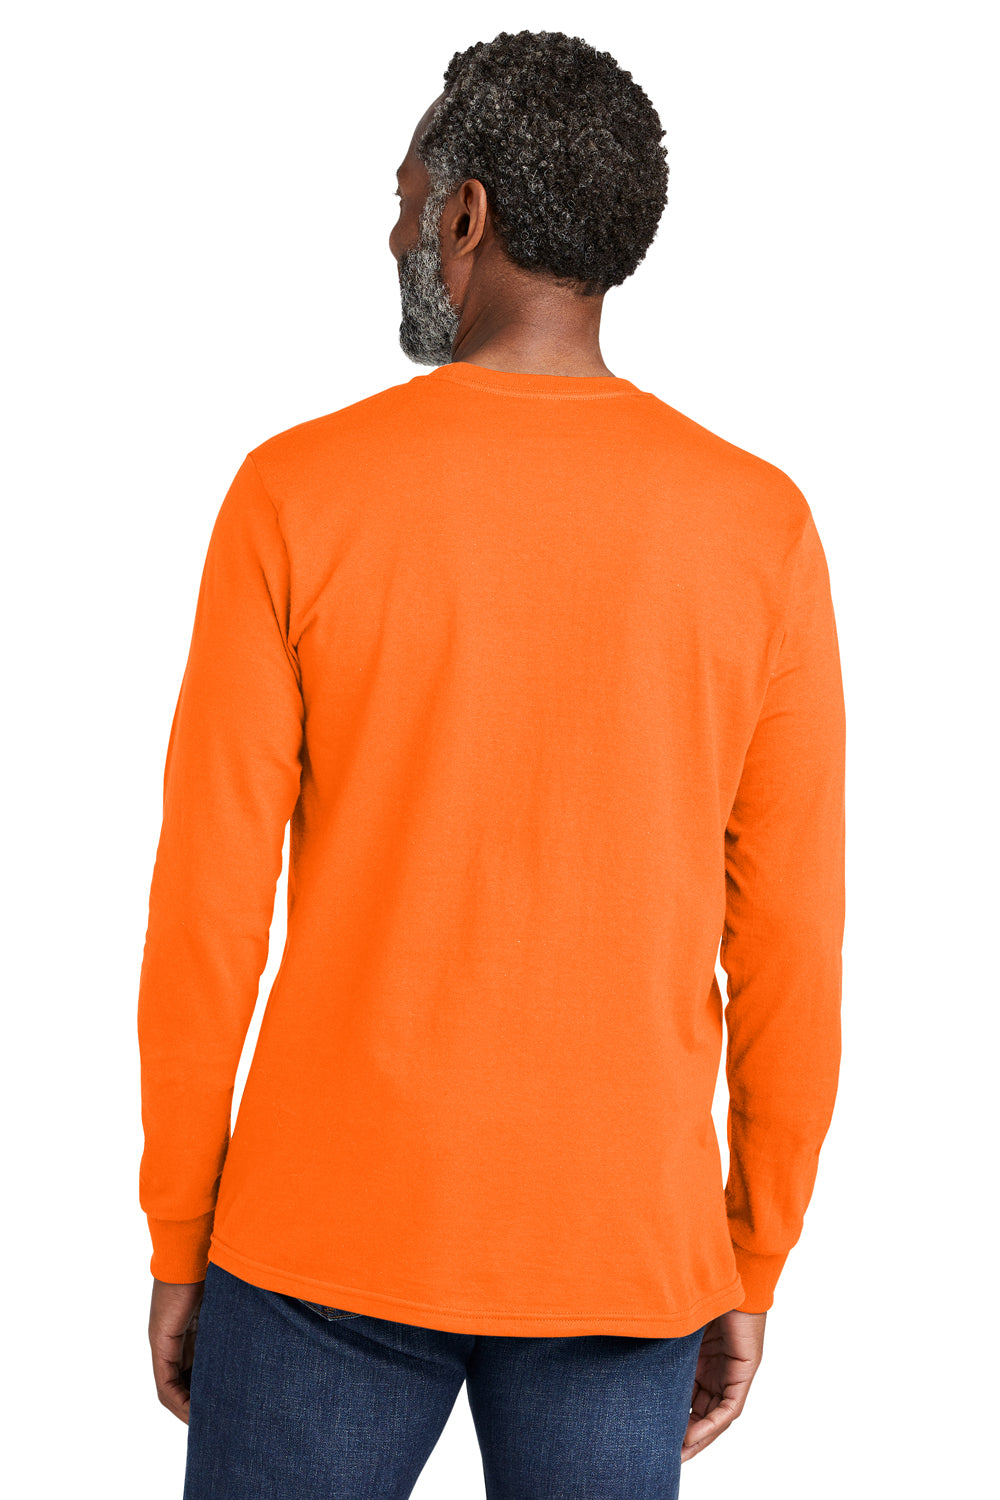 Volunteer Knitwear VL100LS USA Made All American Long Sleeve Crewneck T-Shirts Safety Orange Back